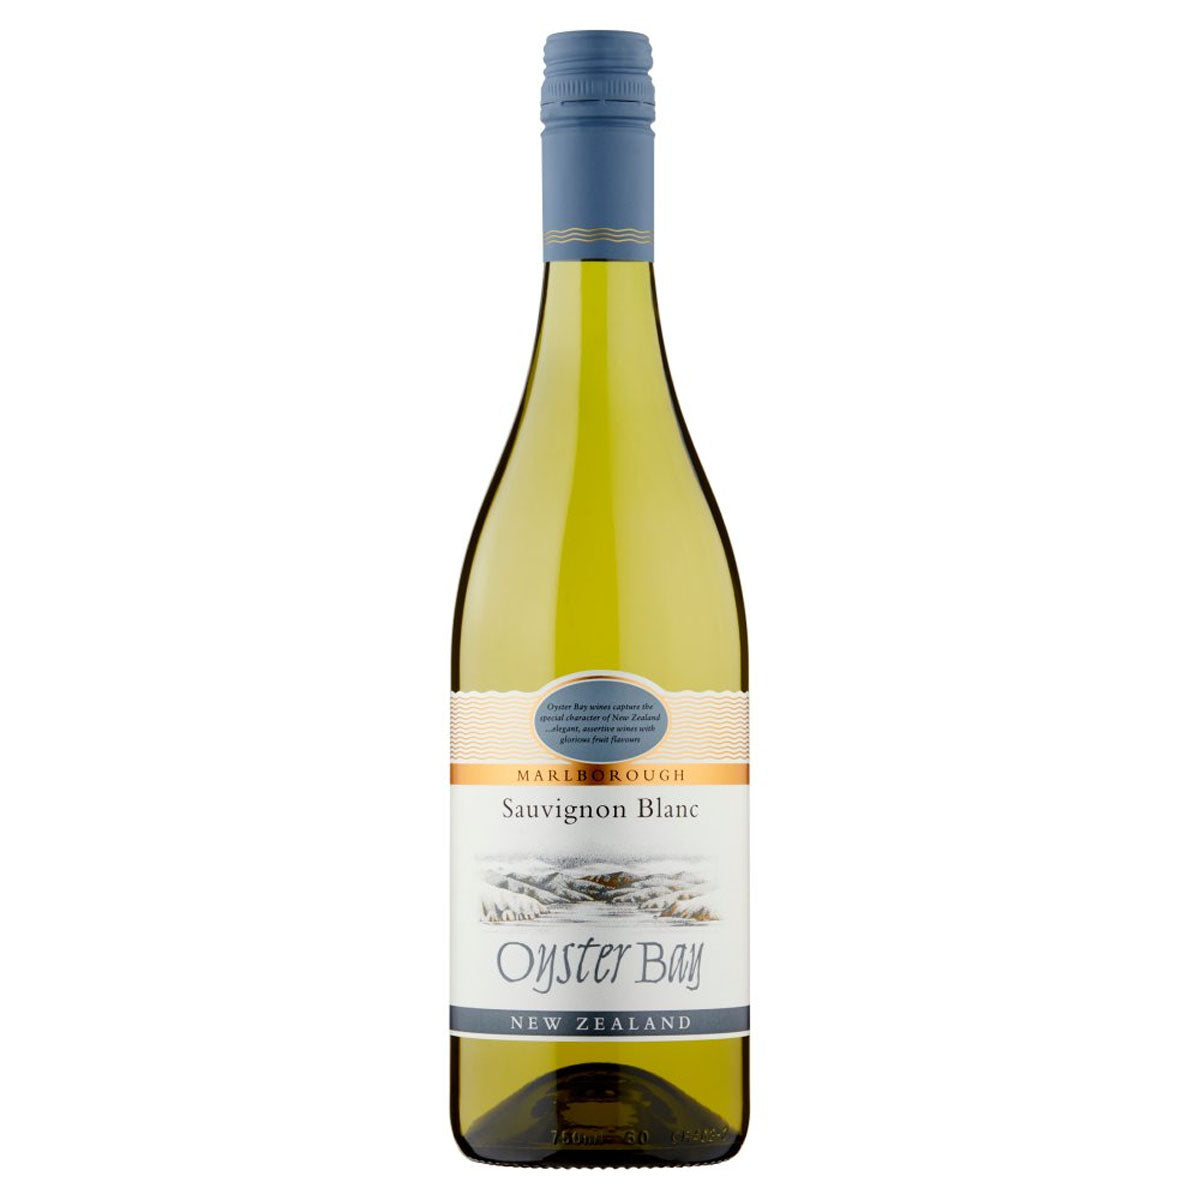 A bottle of Oyster Bay - Marlborough Sauvignon Blanc (13.0% ABV) - 750ml on a white background.